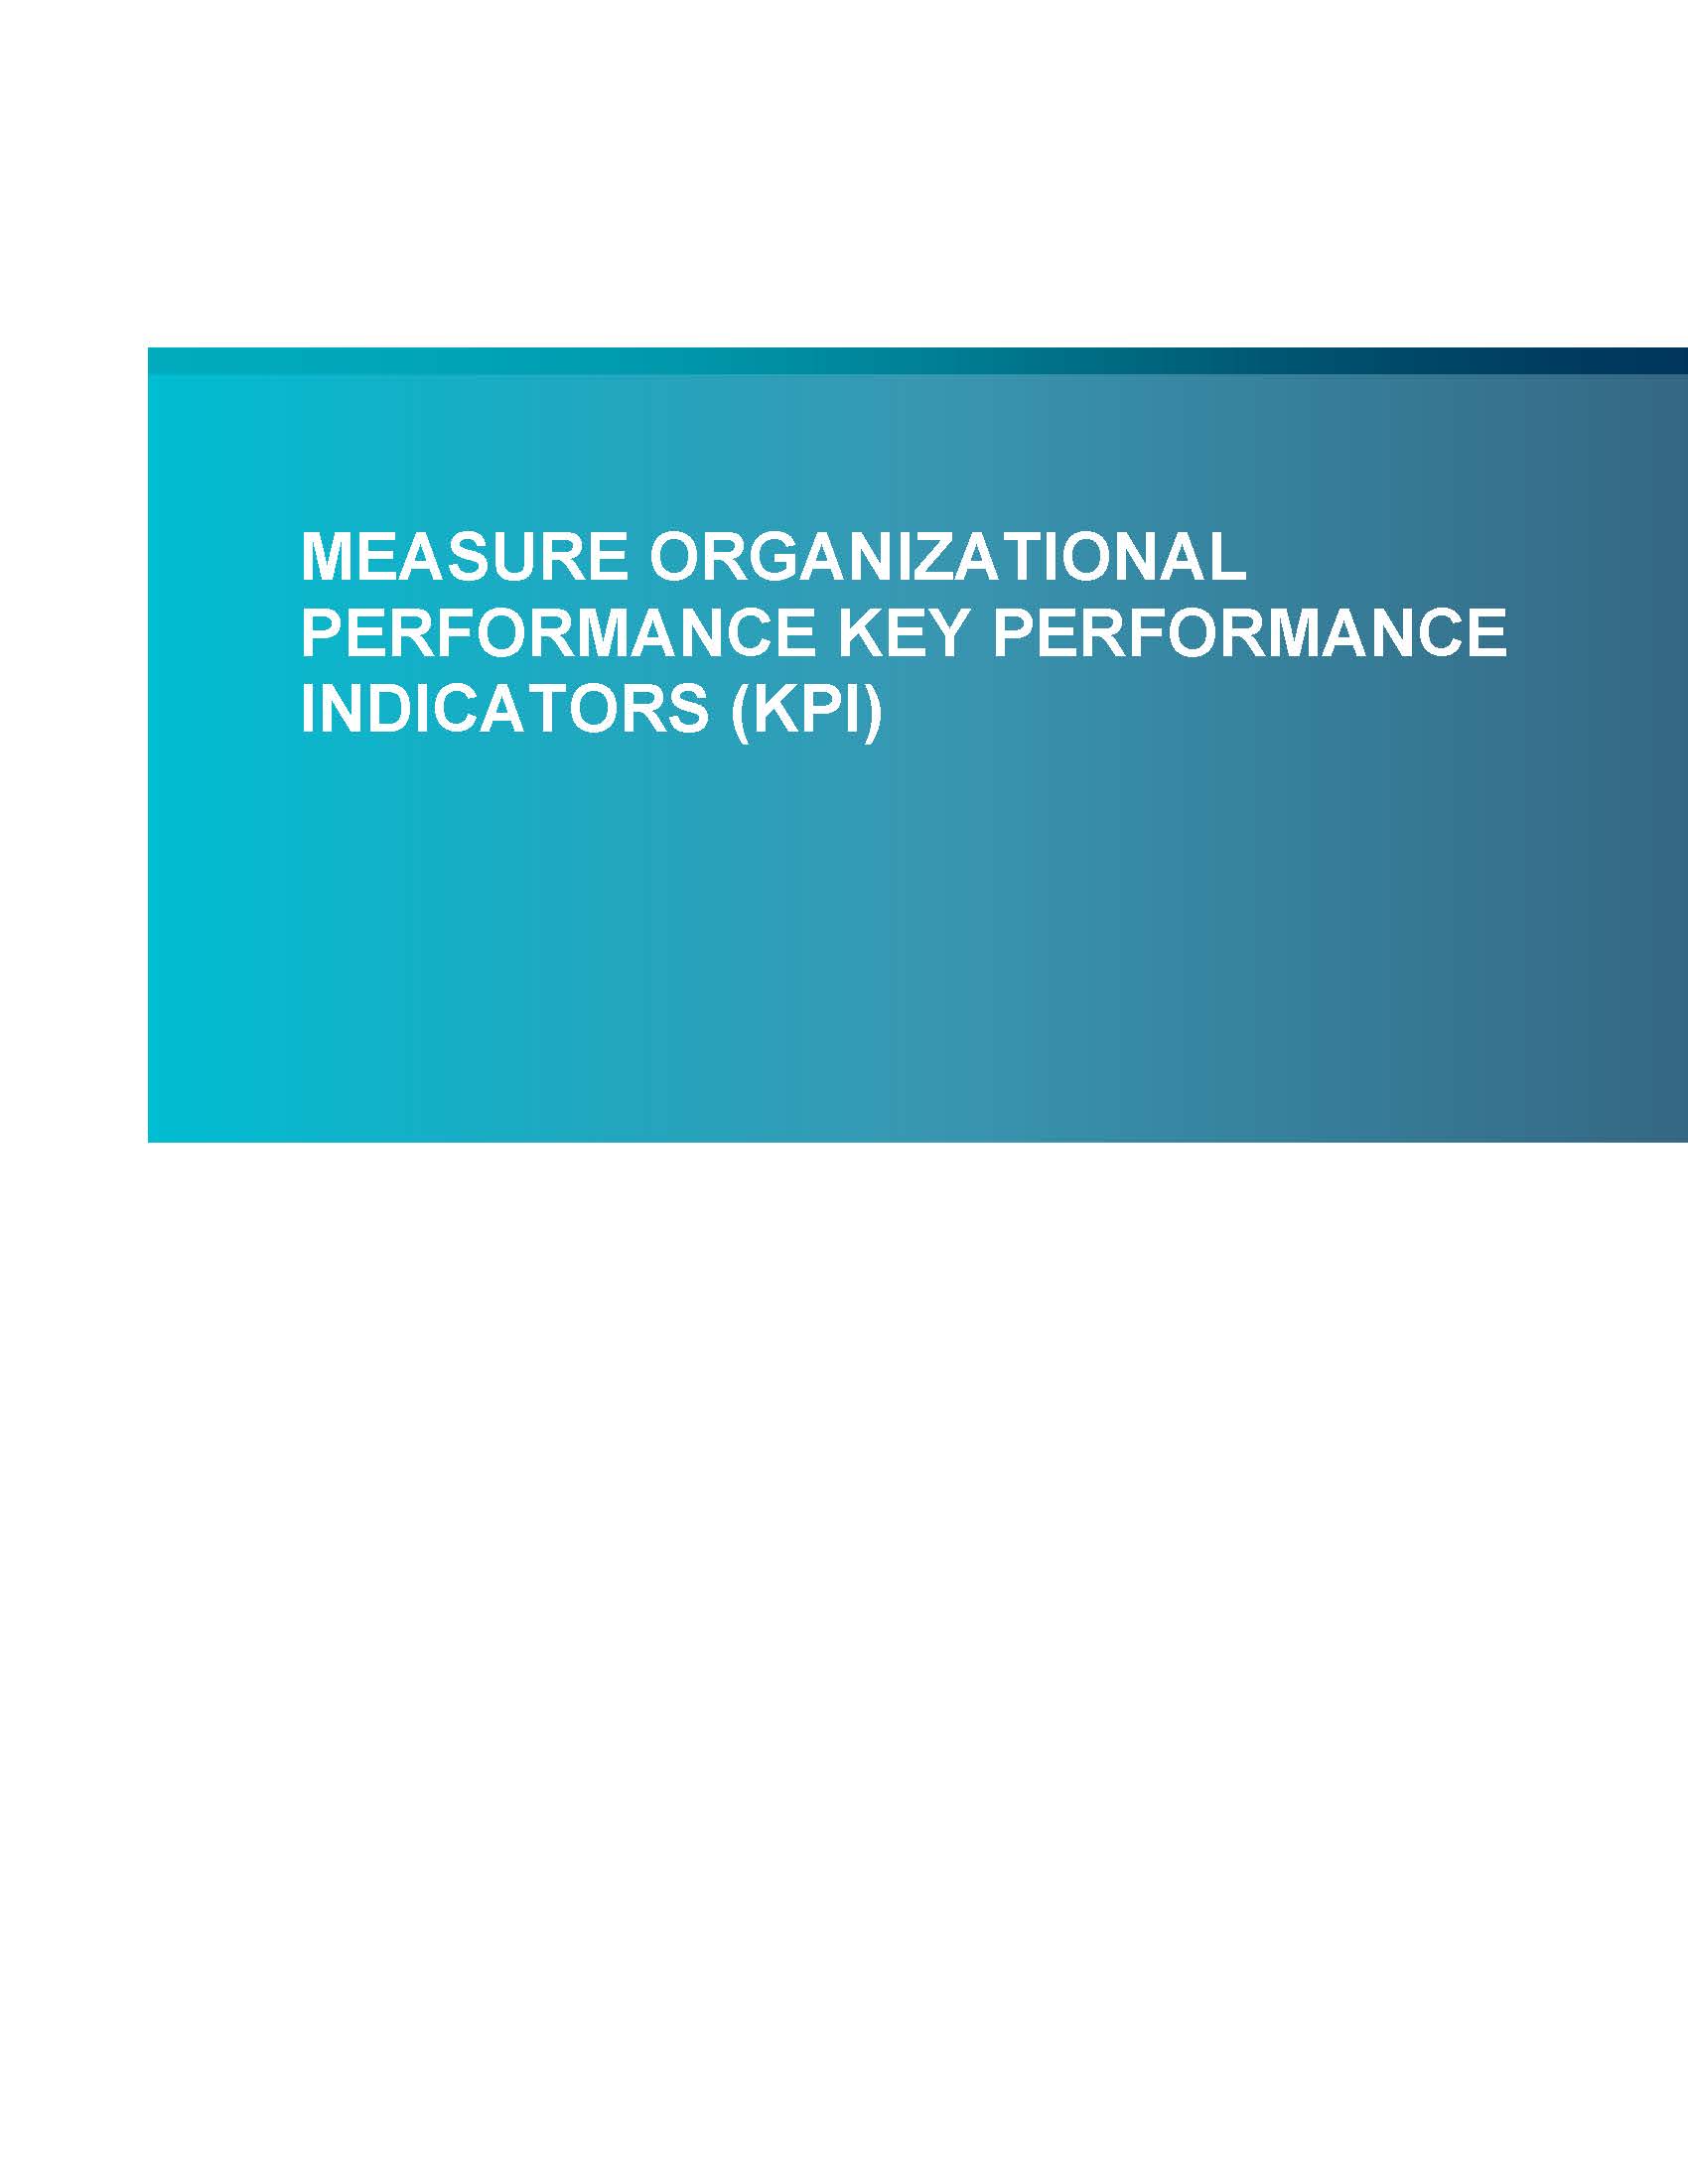 Measure Organizational Performance Key Performance Indicators (KPIs)